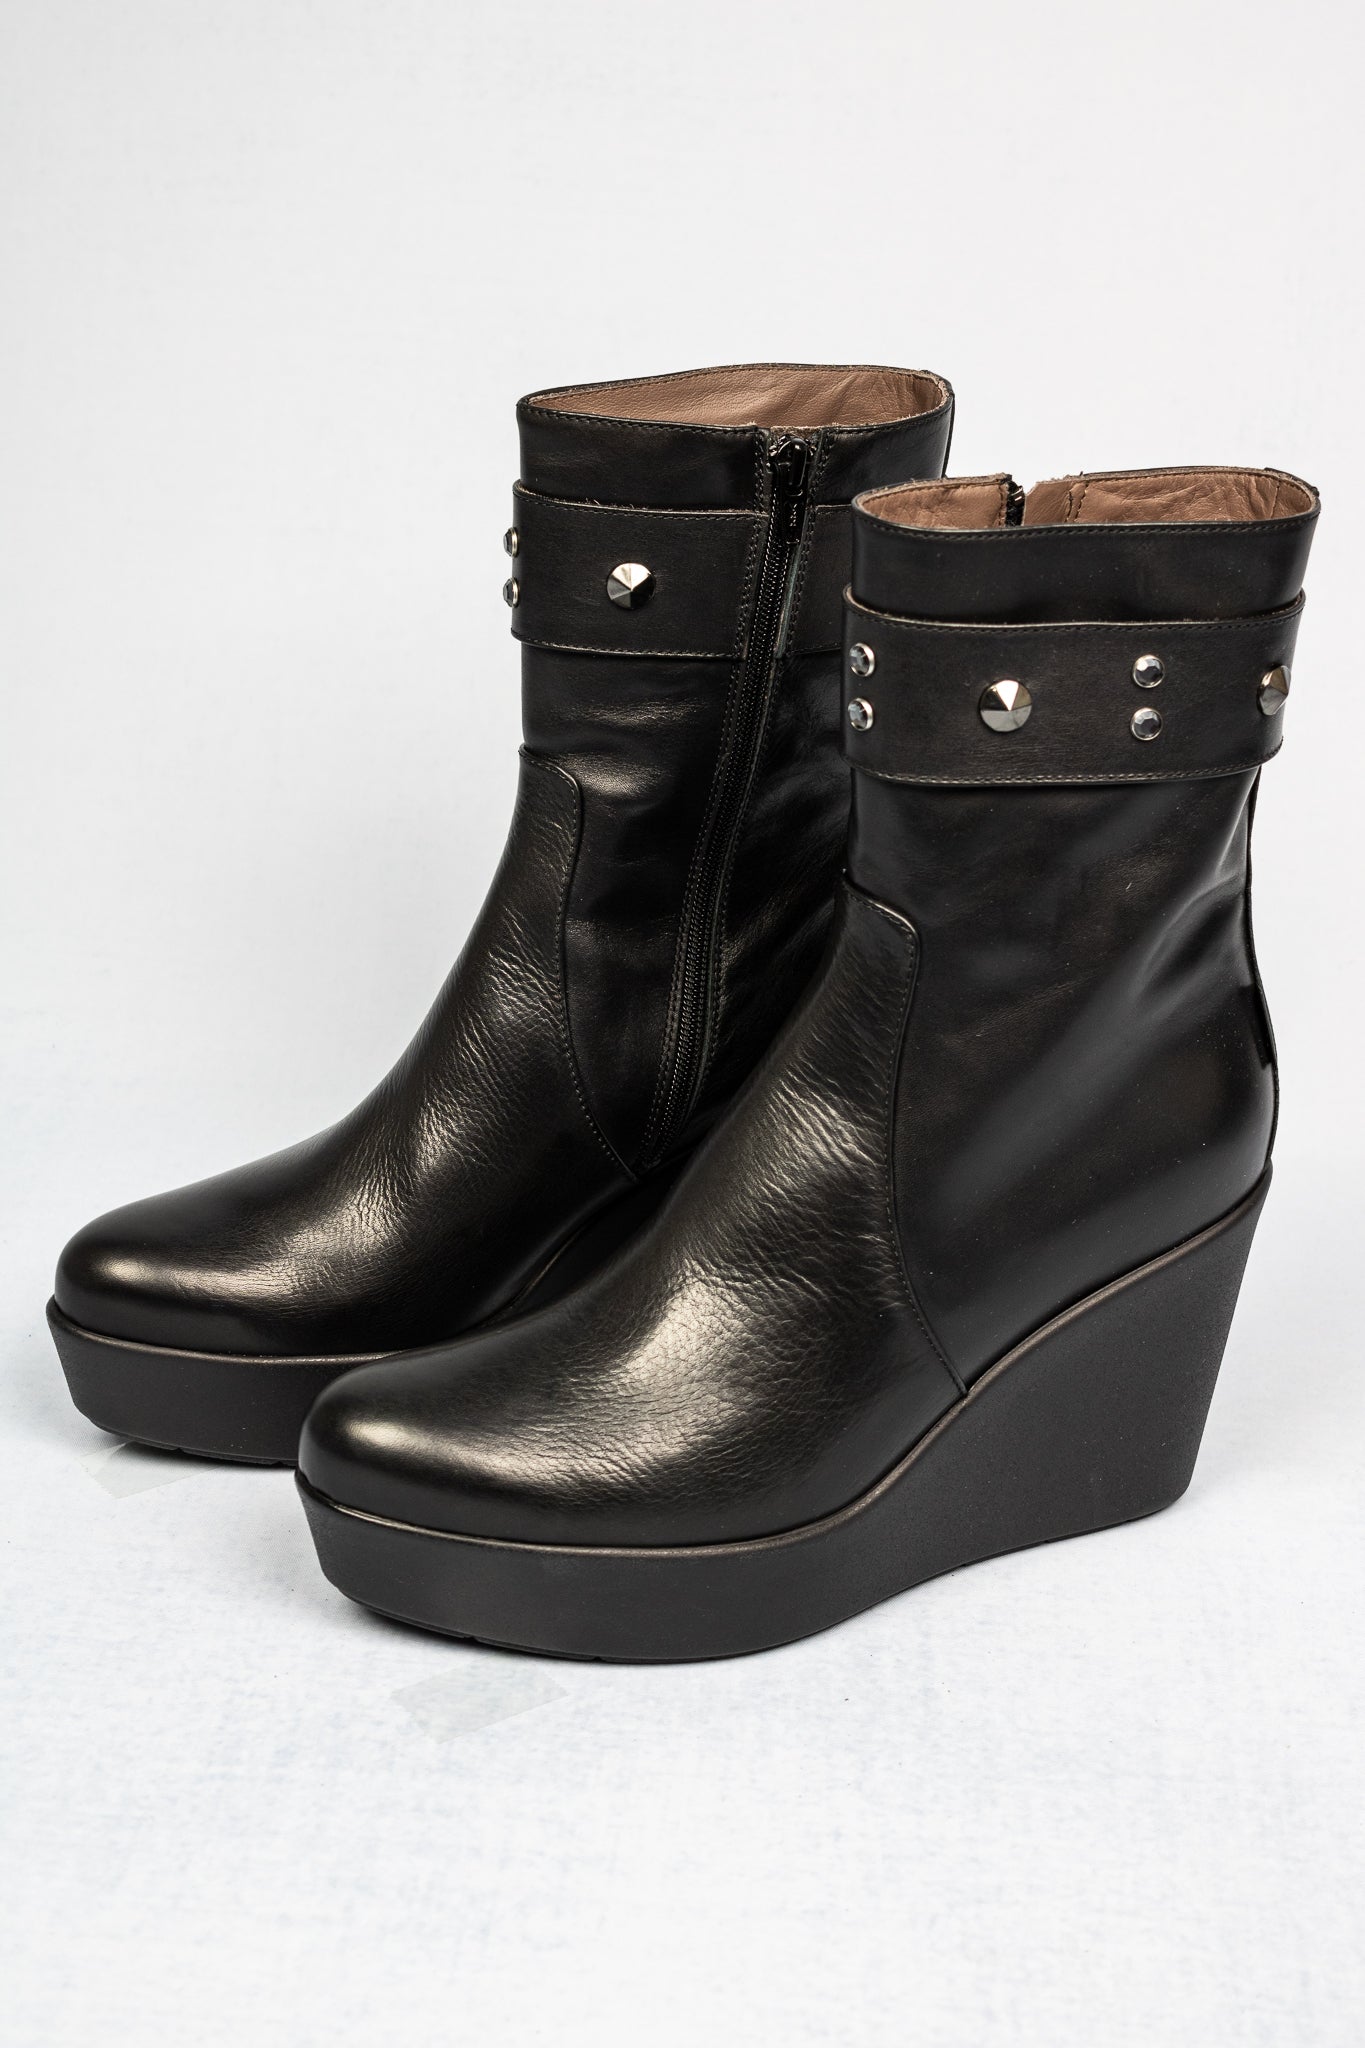 black wedge boots ireland